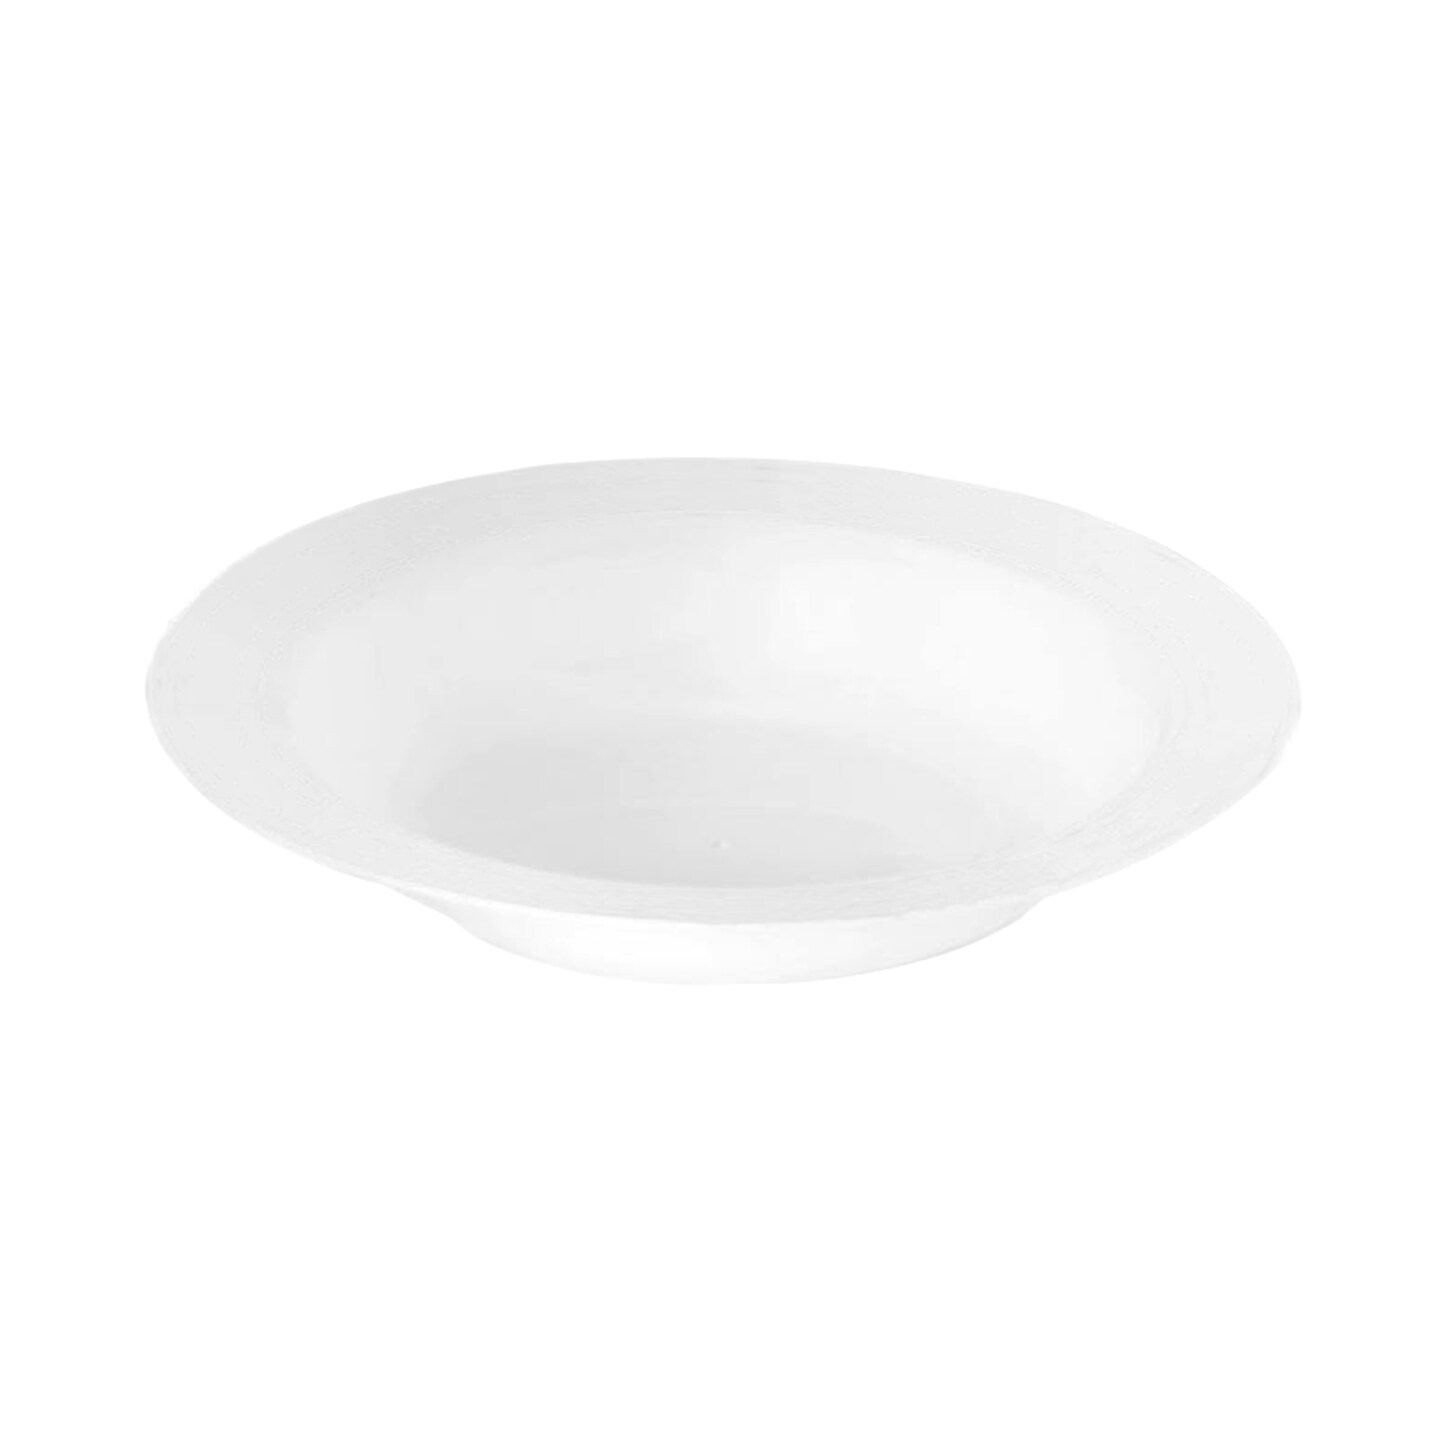 Solid White Edge Rim Round Disposable Plastic Dessert Bowls - 5 Ounce (120 Bowls)